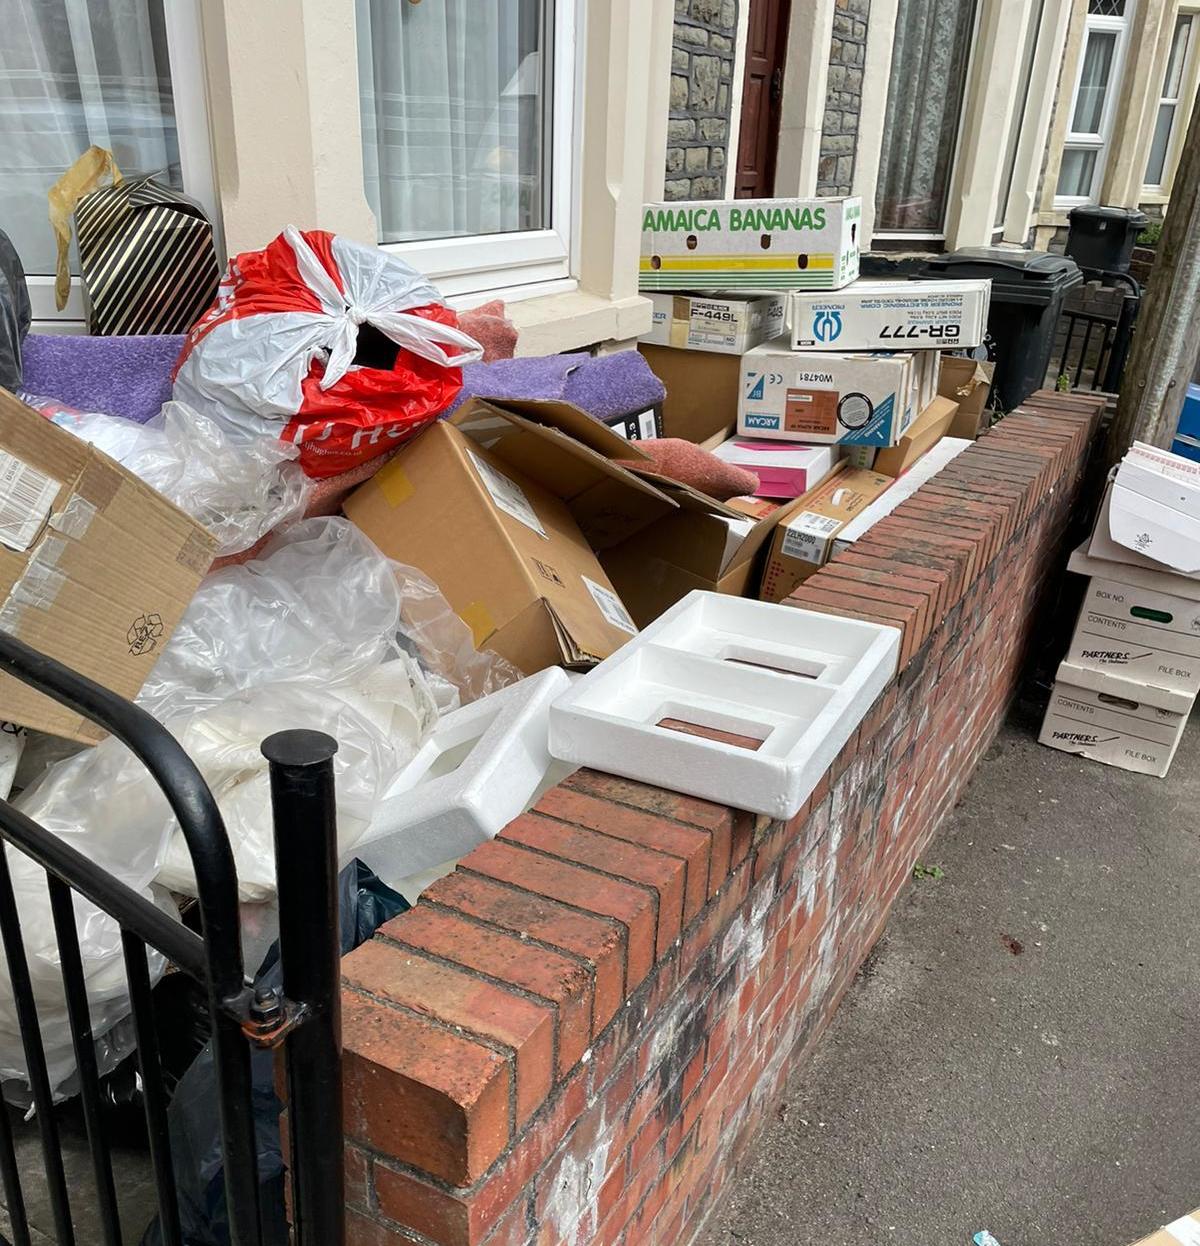 Waste removal in Bristol